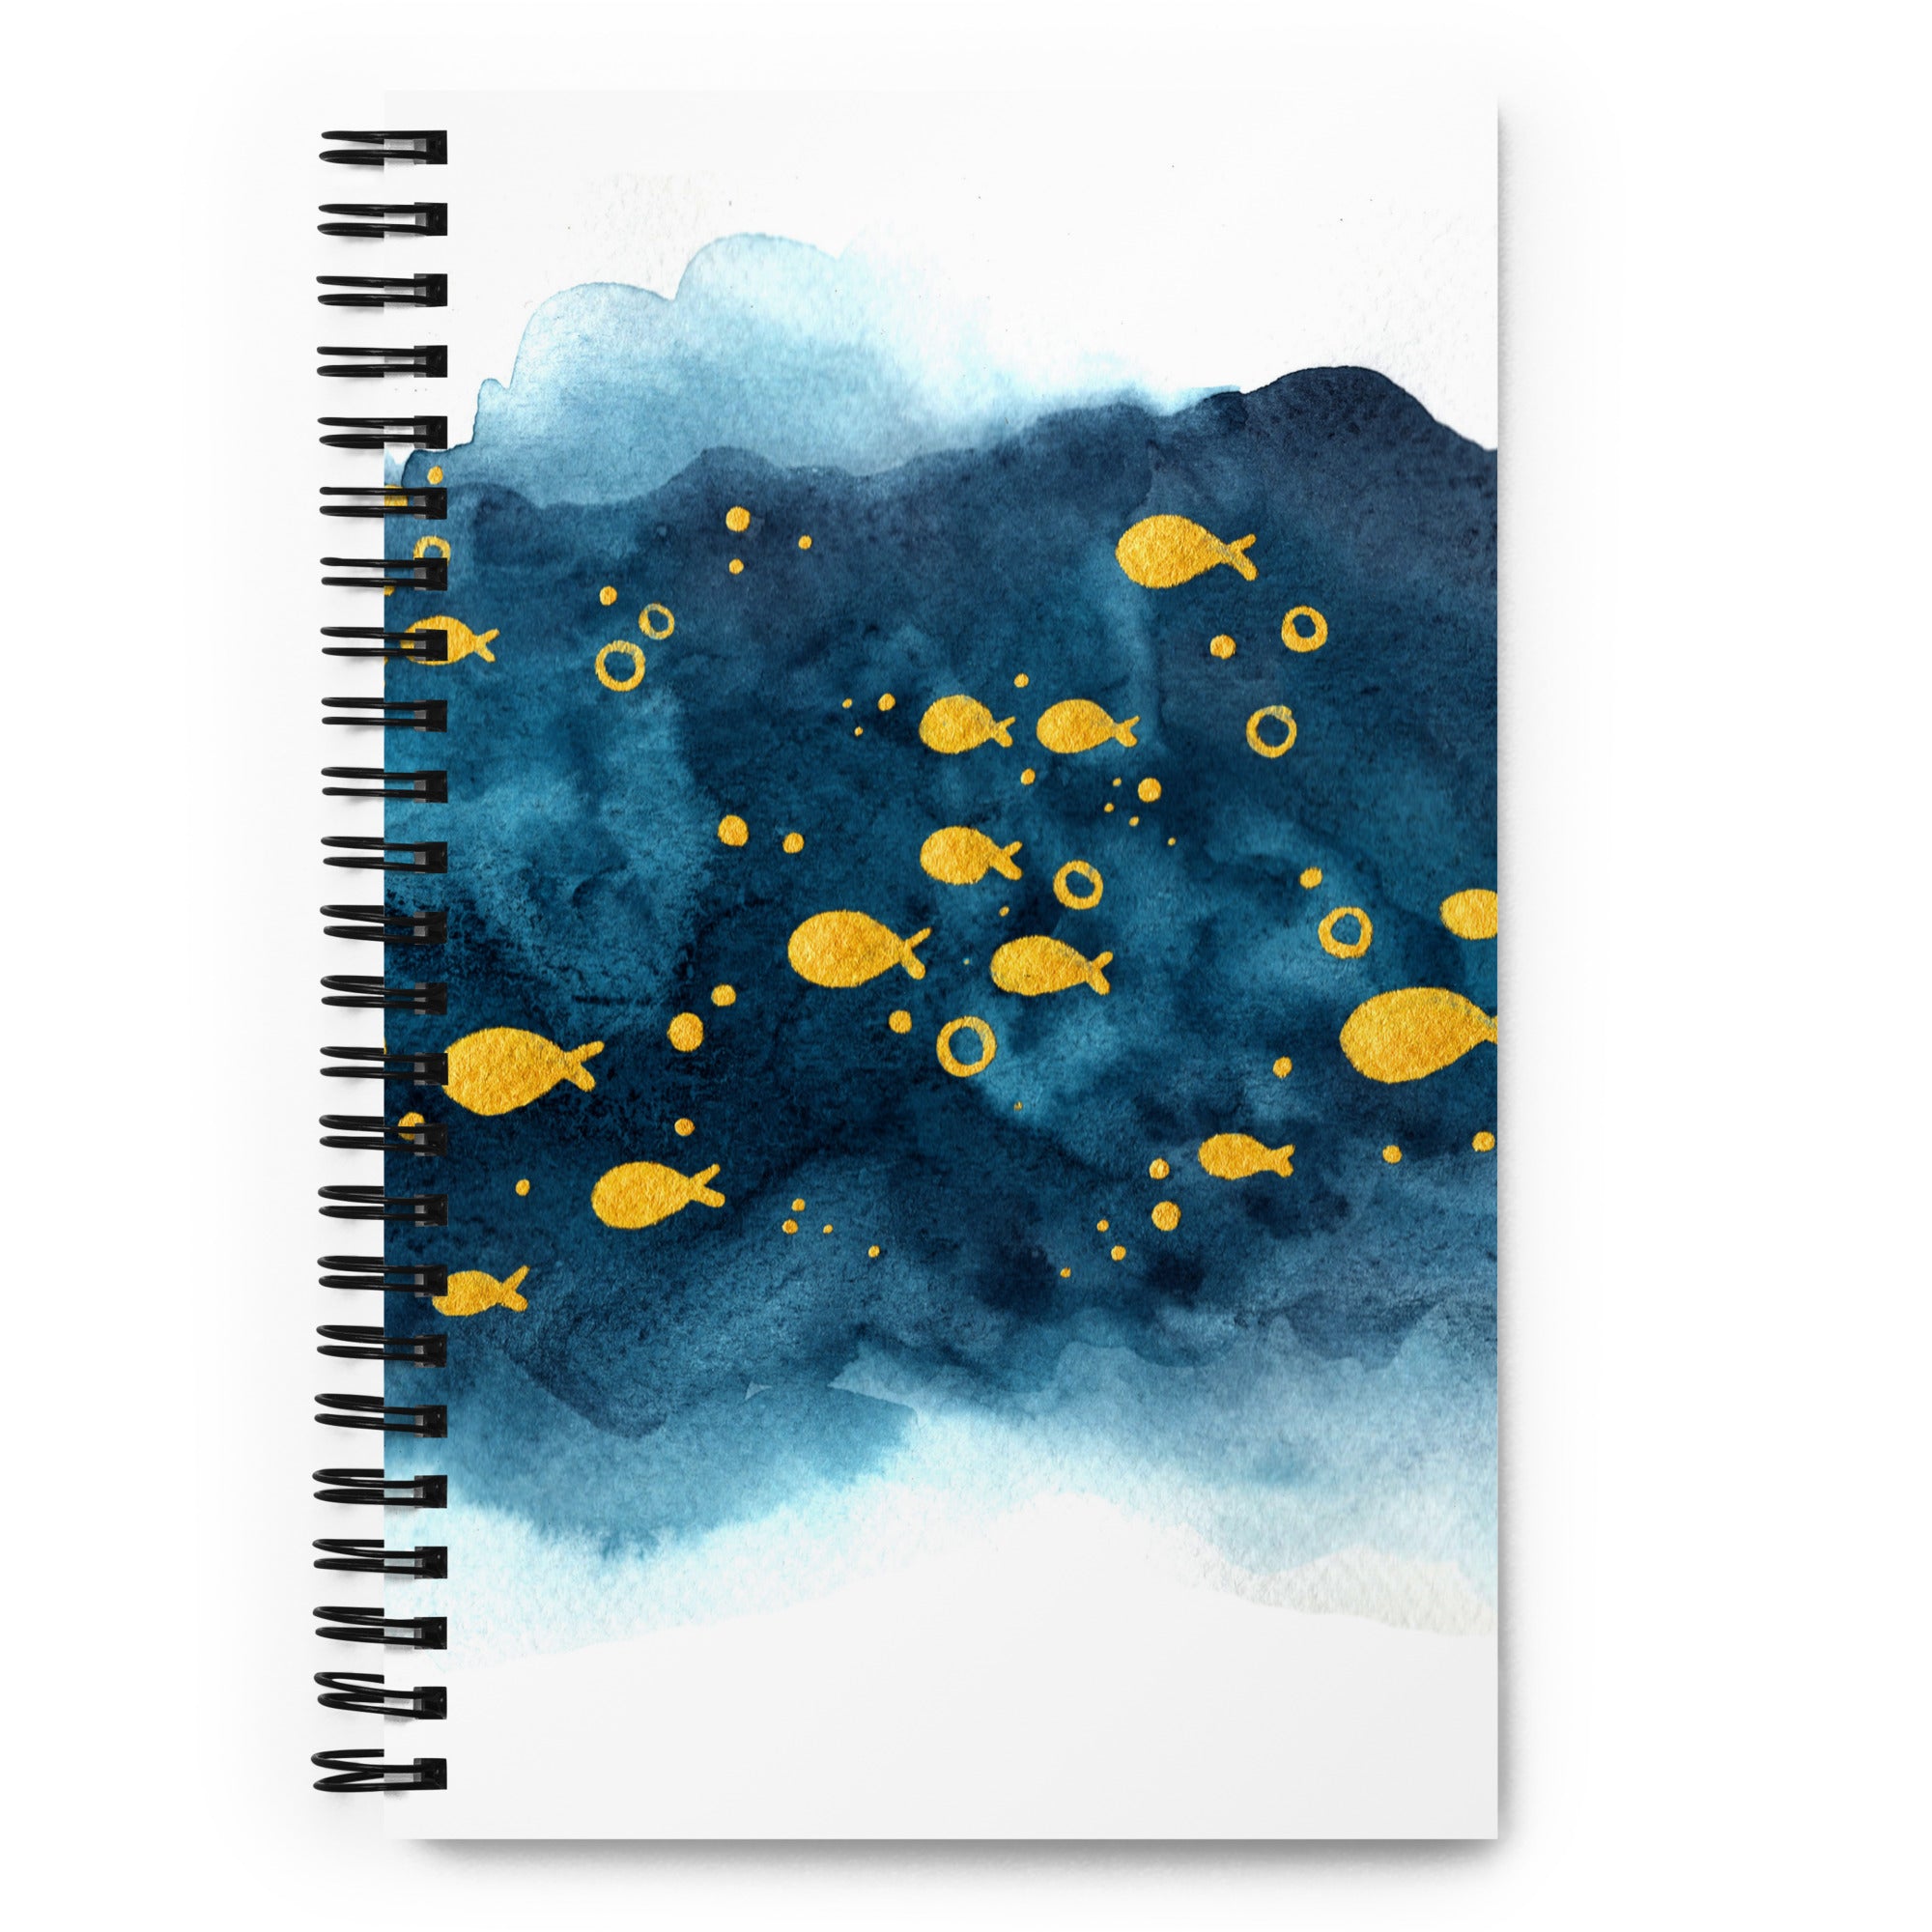 Watercolor School of Fish Spiral notebook